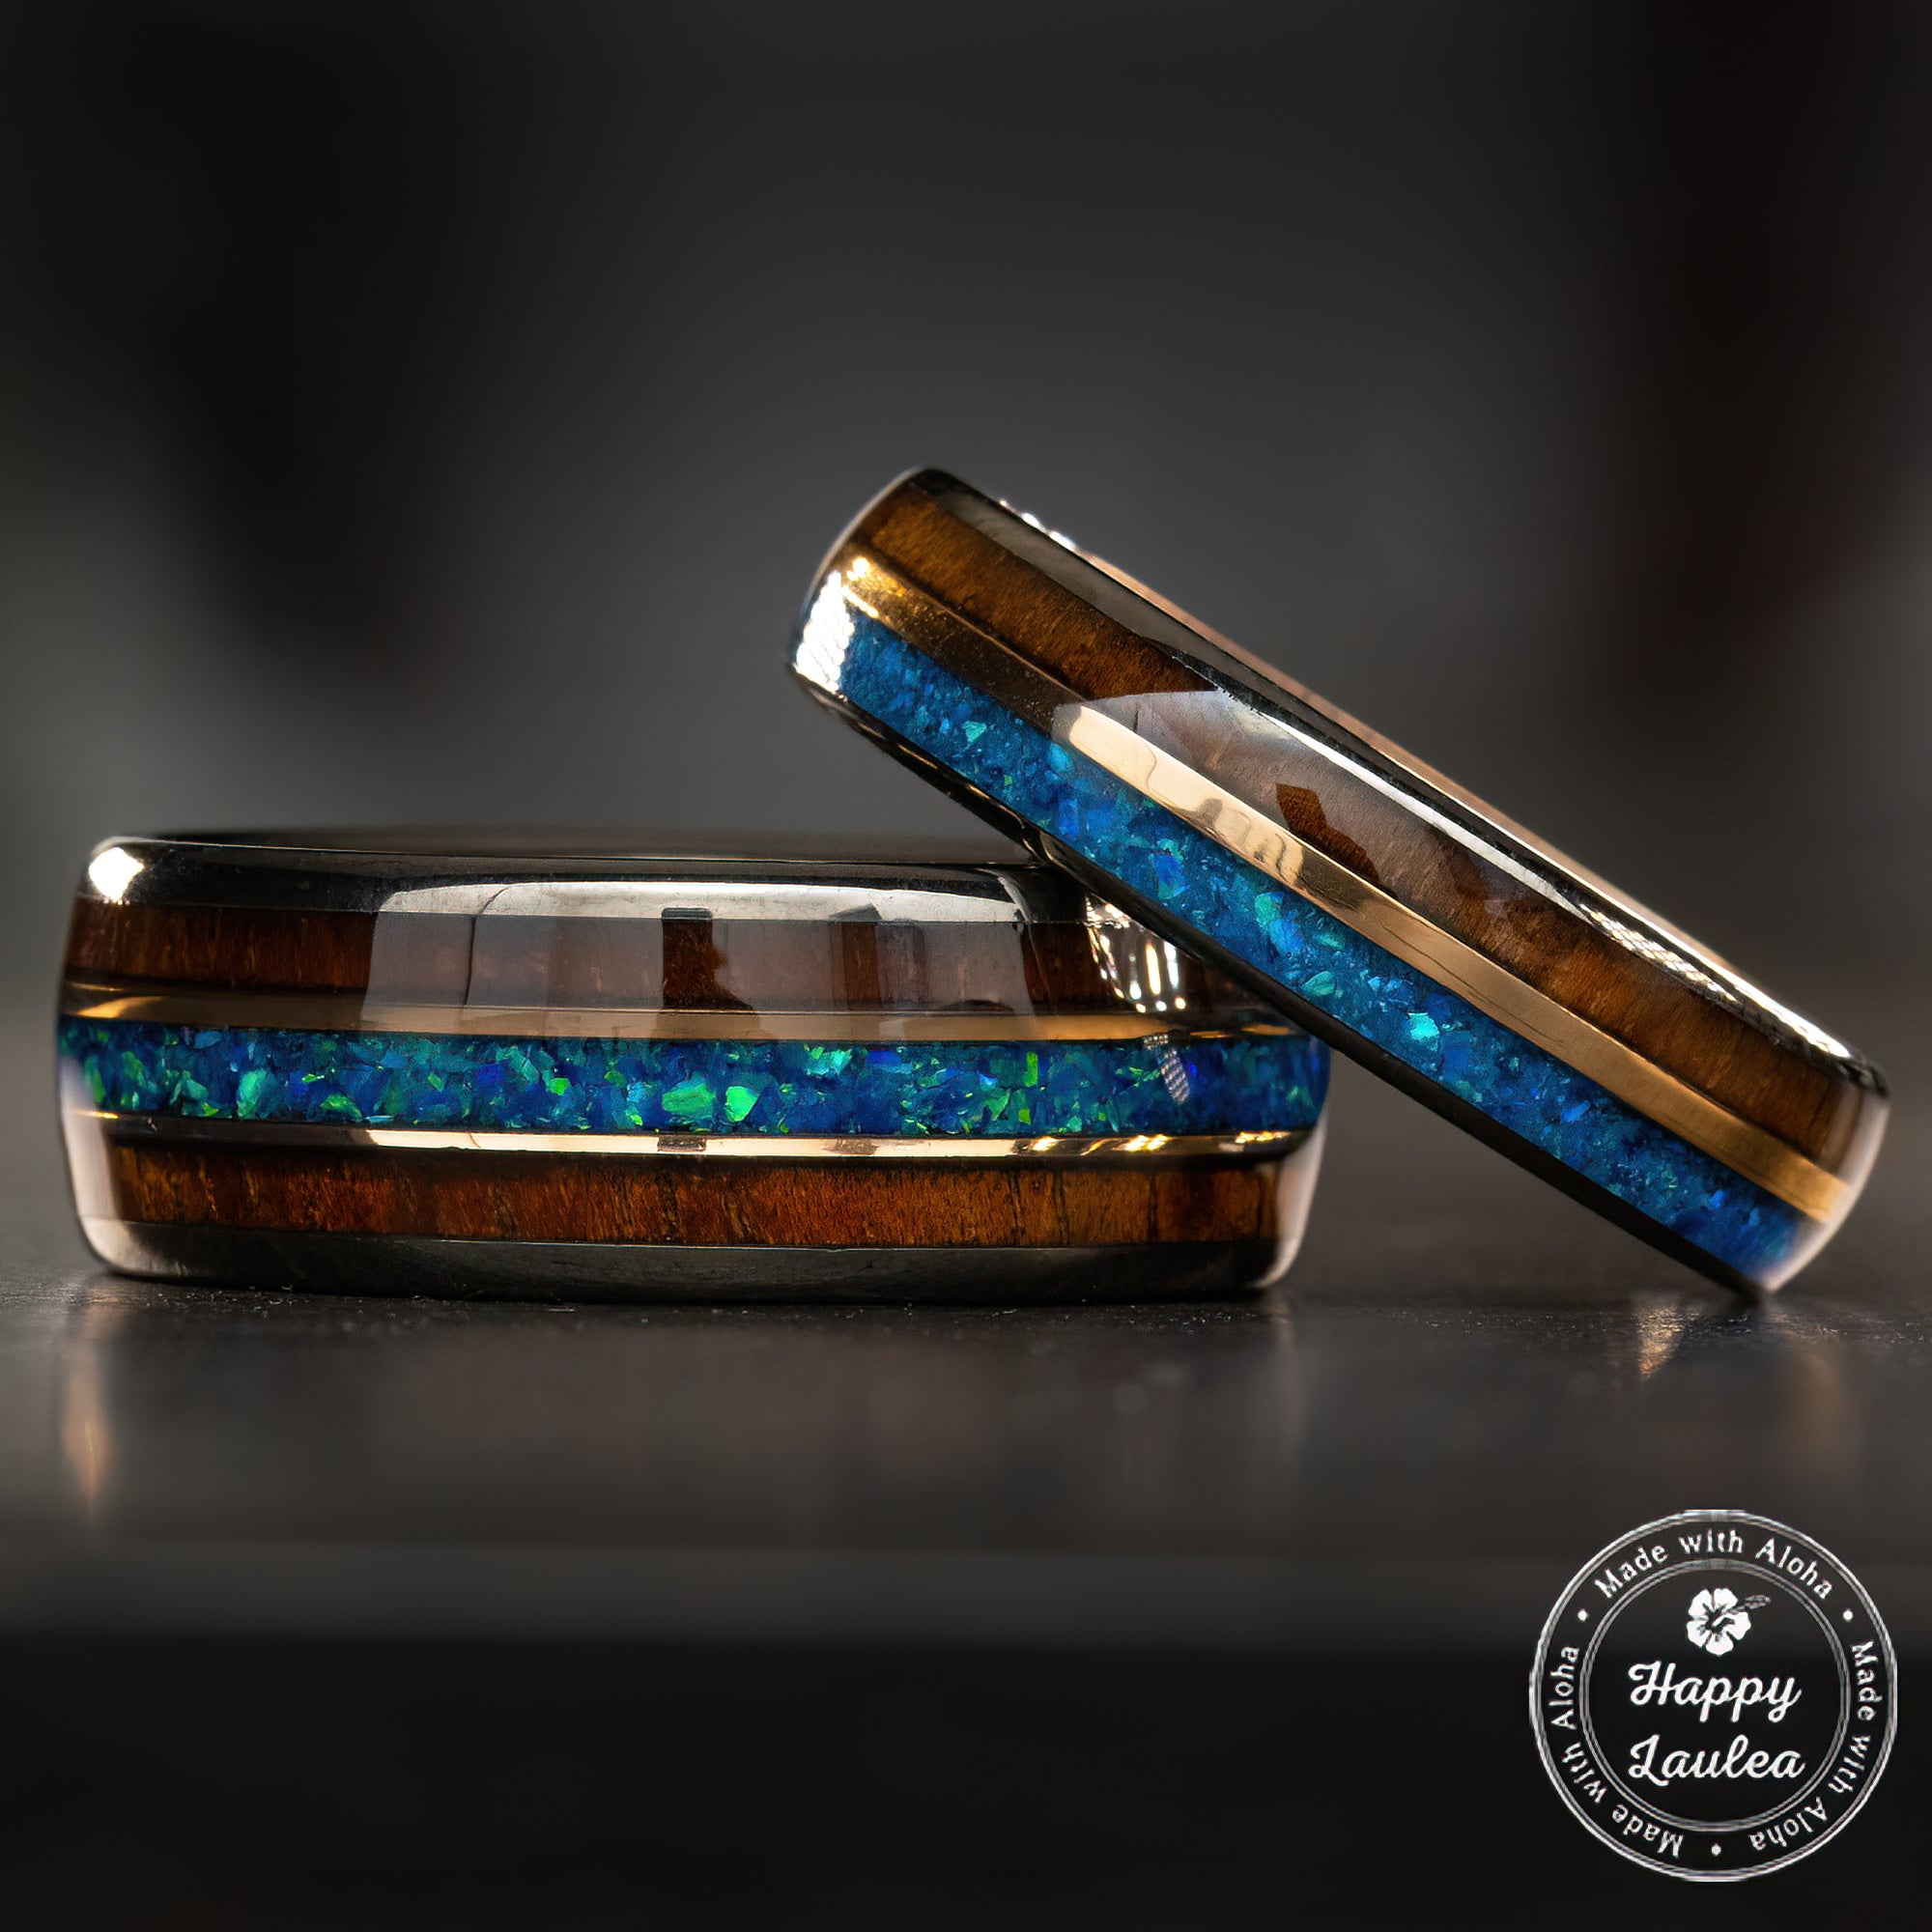 Pair of Gungrey Tungsten Carbide Mid-Rose Gold Strip Rings [5 & 8mm width] Azure Blue Opal & Hawaiian Koa Wood